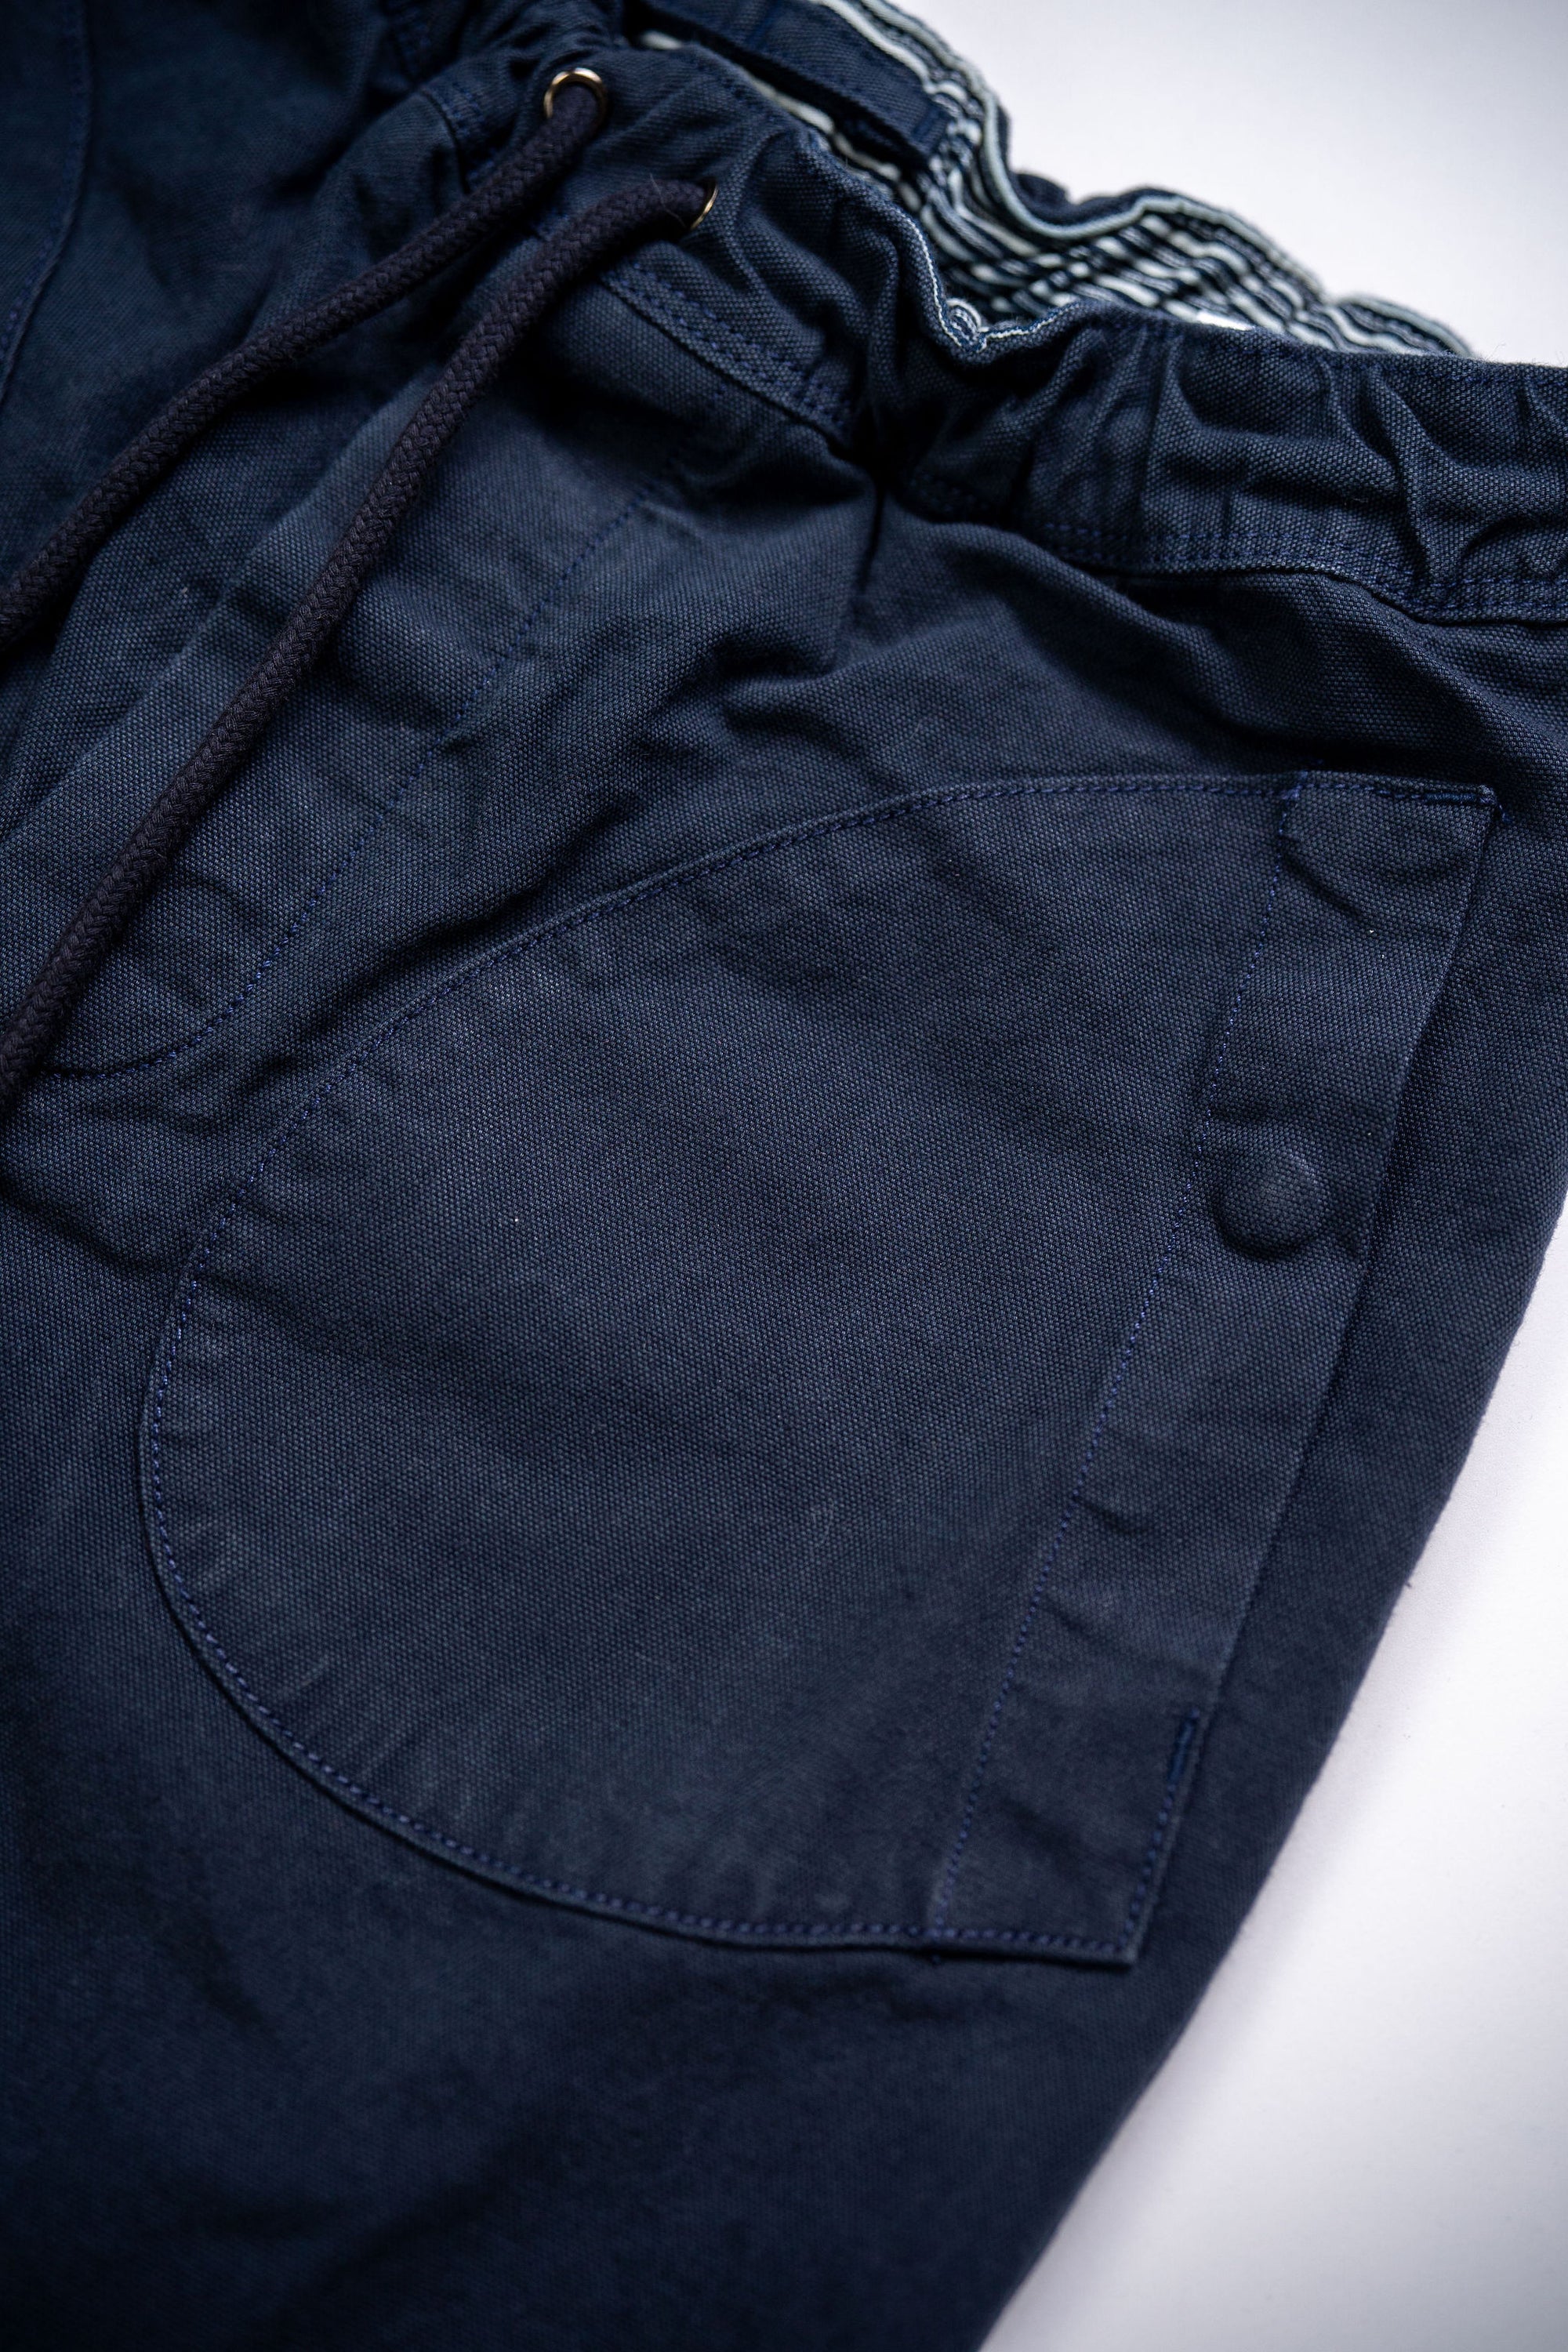 Freenote Cloth Deck Shorts - Navy